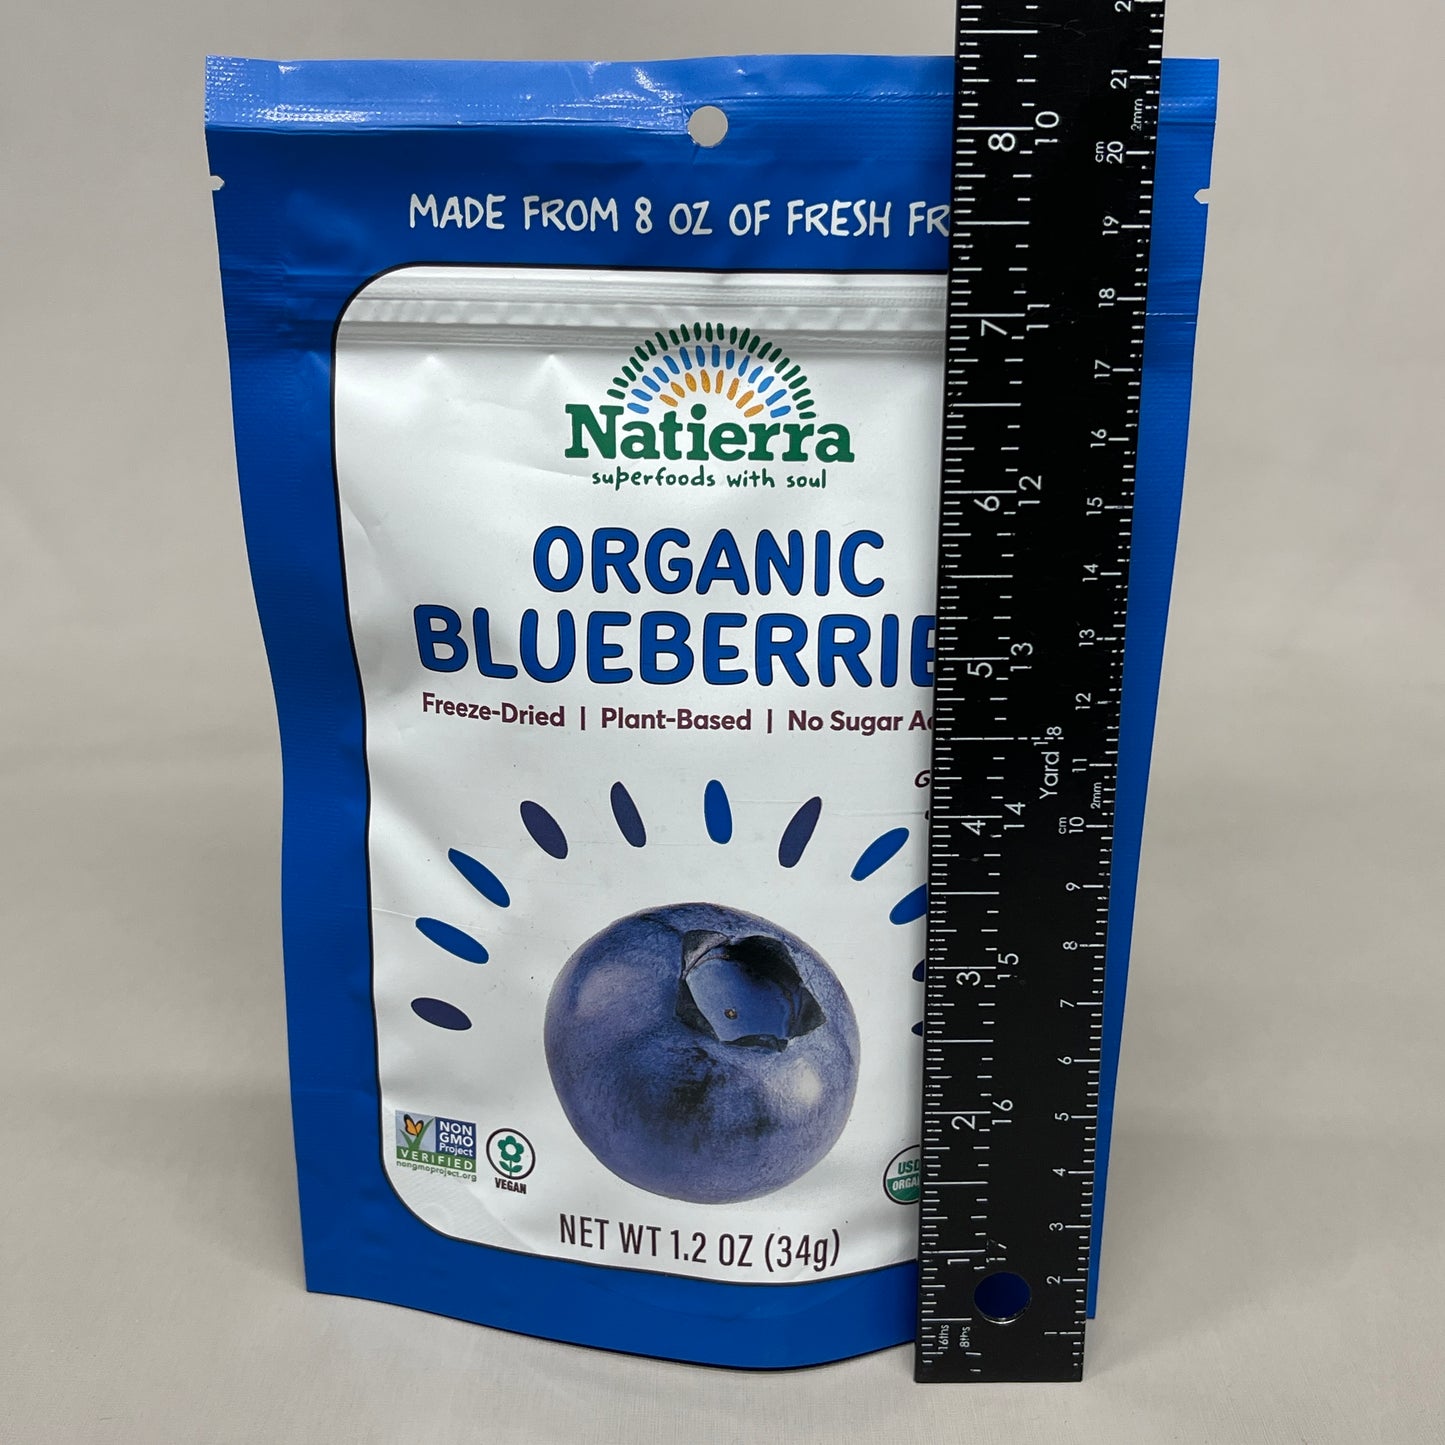 NATIERRA Nature & Earth Freeze-Dried Organic Blueberries 1.2oz -3 packs (New)